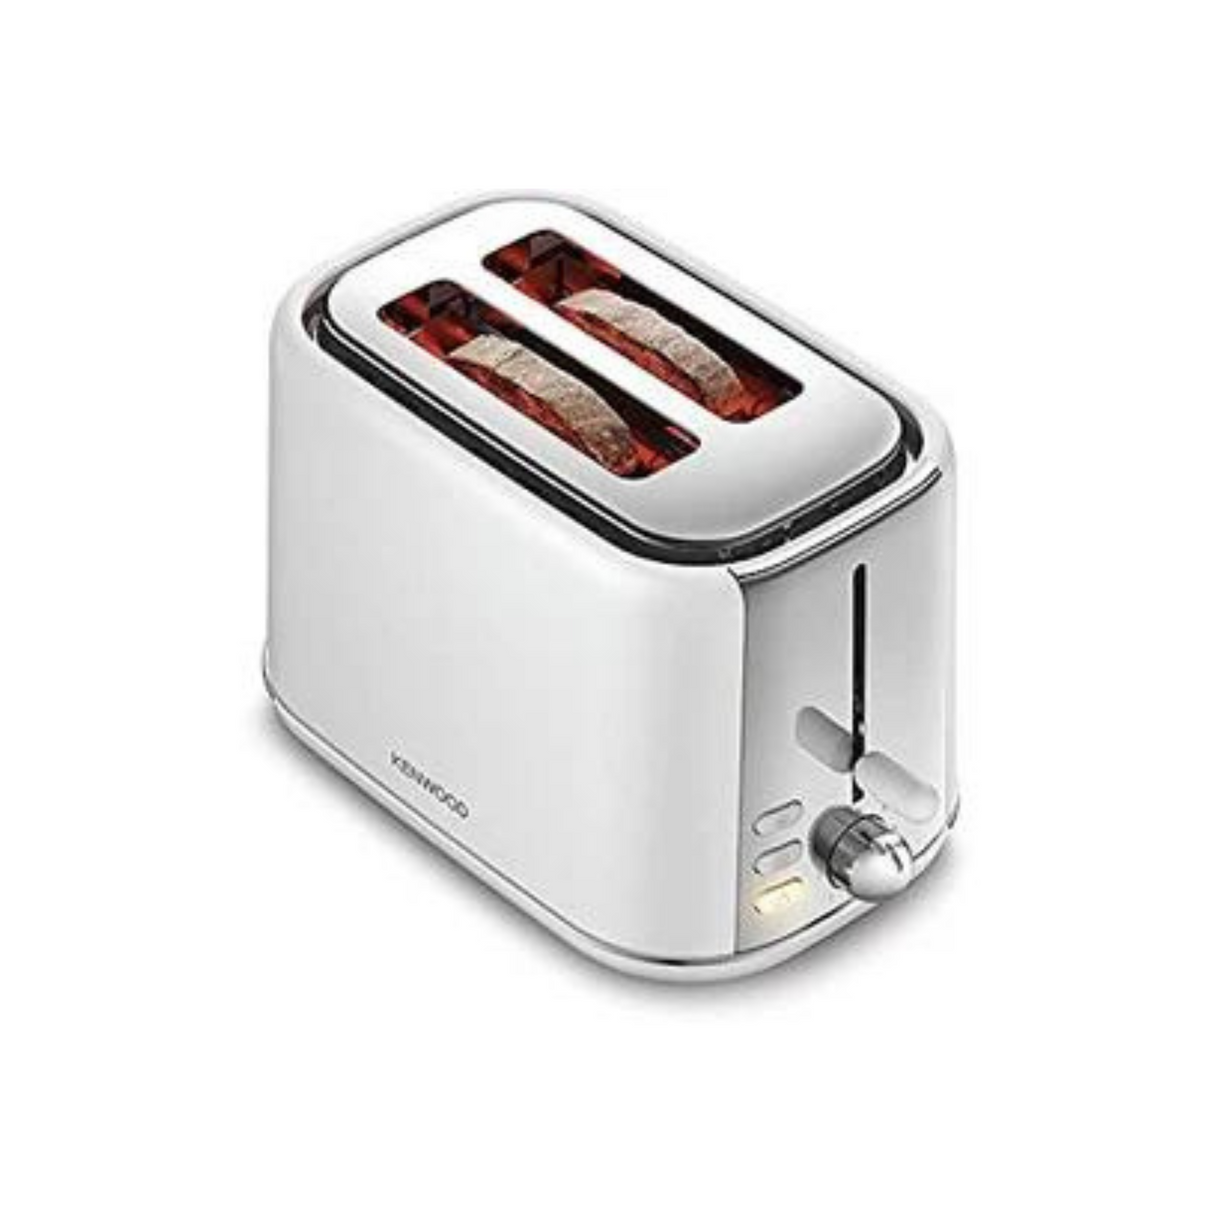 Kenwood Abbey Lux 2 Slice Toaster